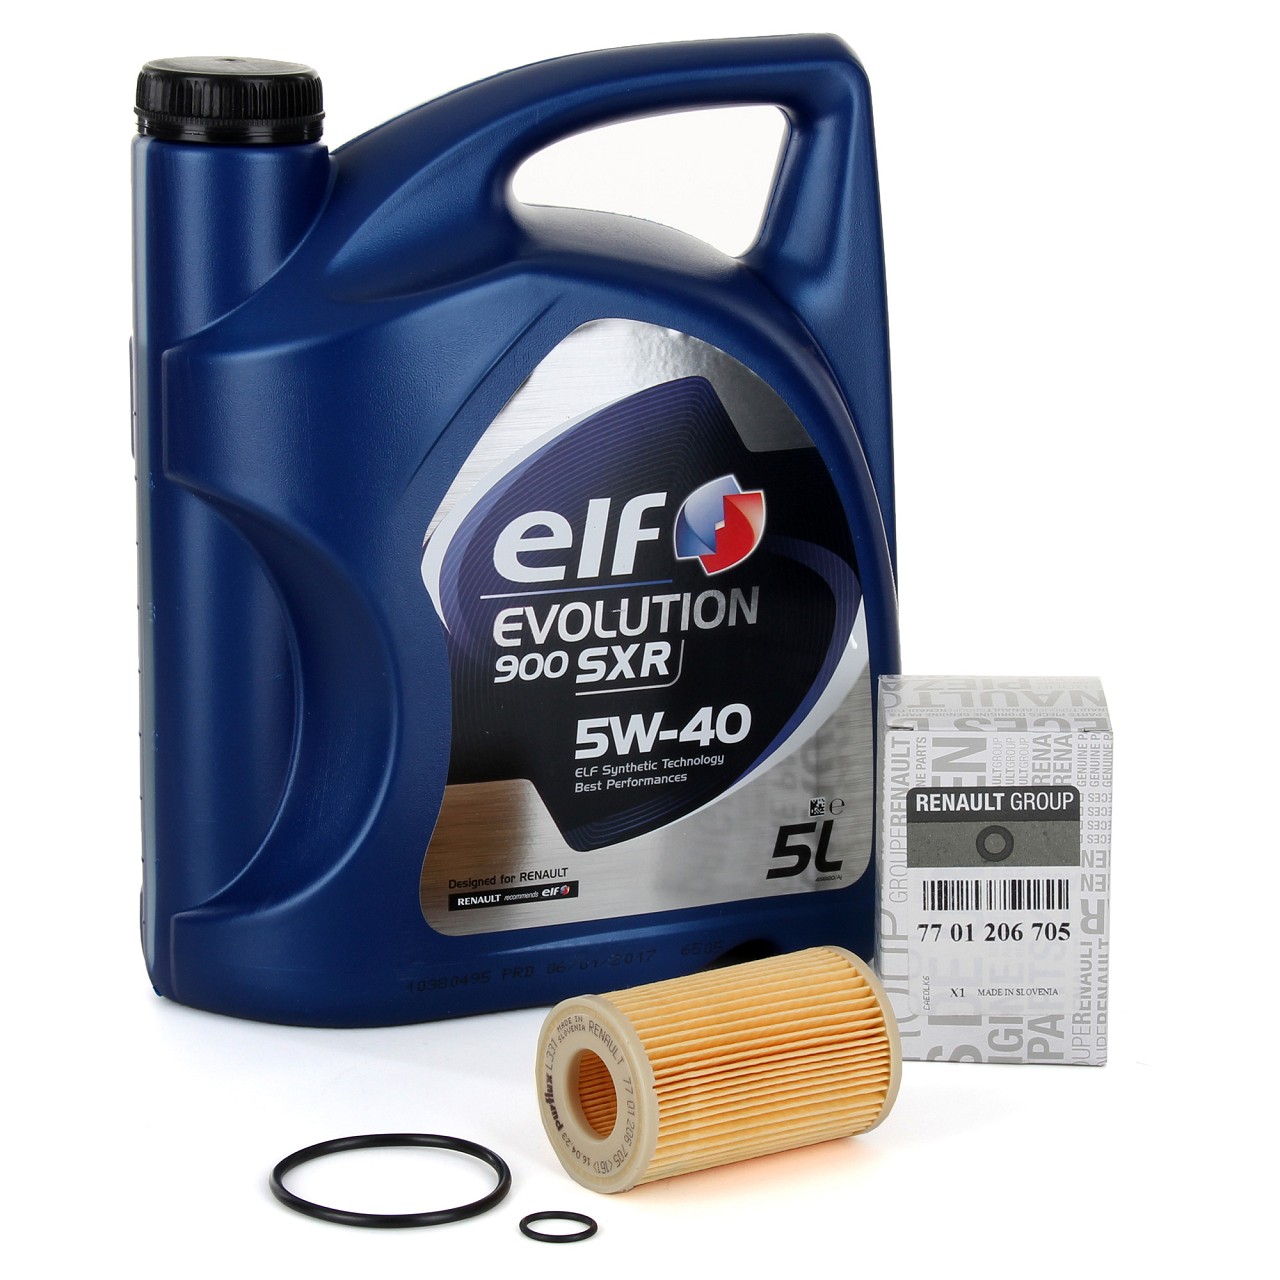 5L elf Evolution 900 SXR 5W-40 Motoröl + ORIGINAL Renault Ölfilter 7701206705